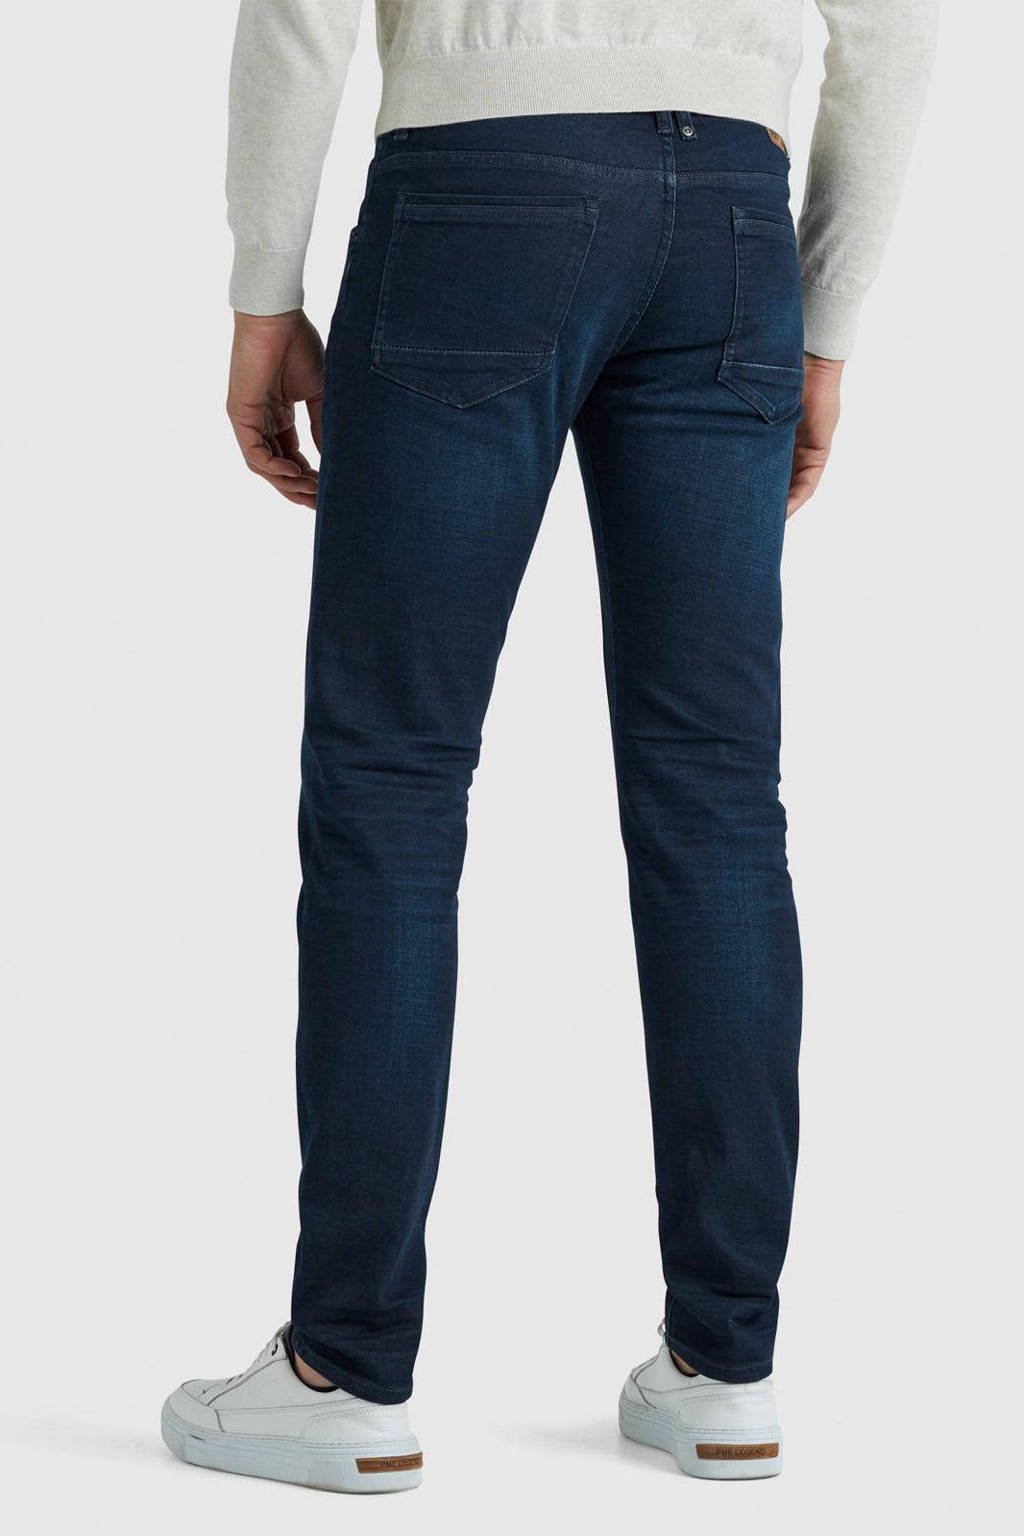 PME Legend slim fit jeans Tailwheel dds | wehkamp